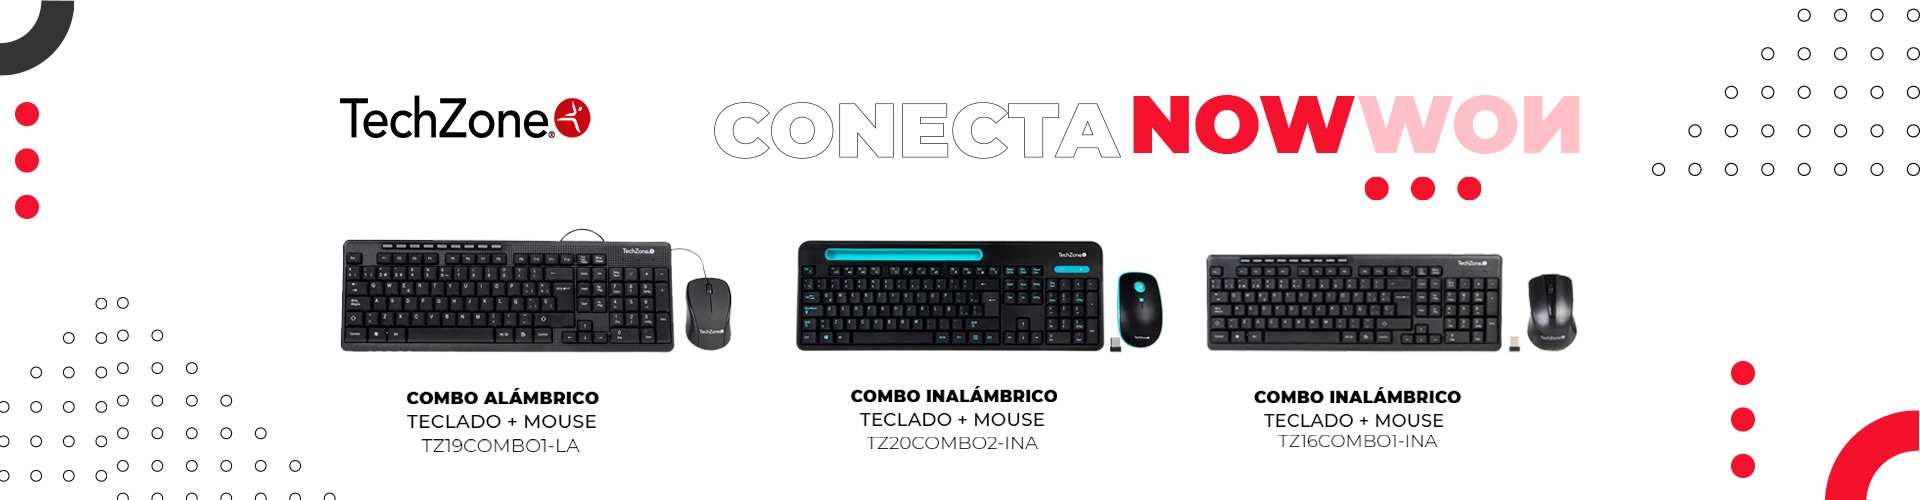 Techzone conecta Now